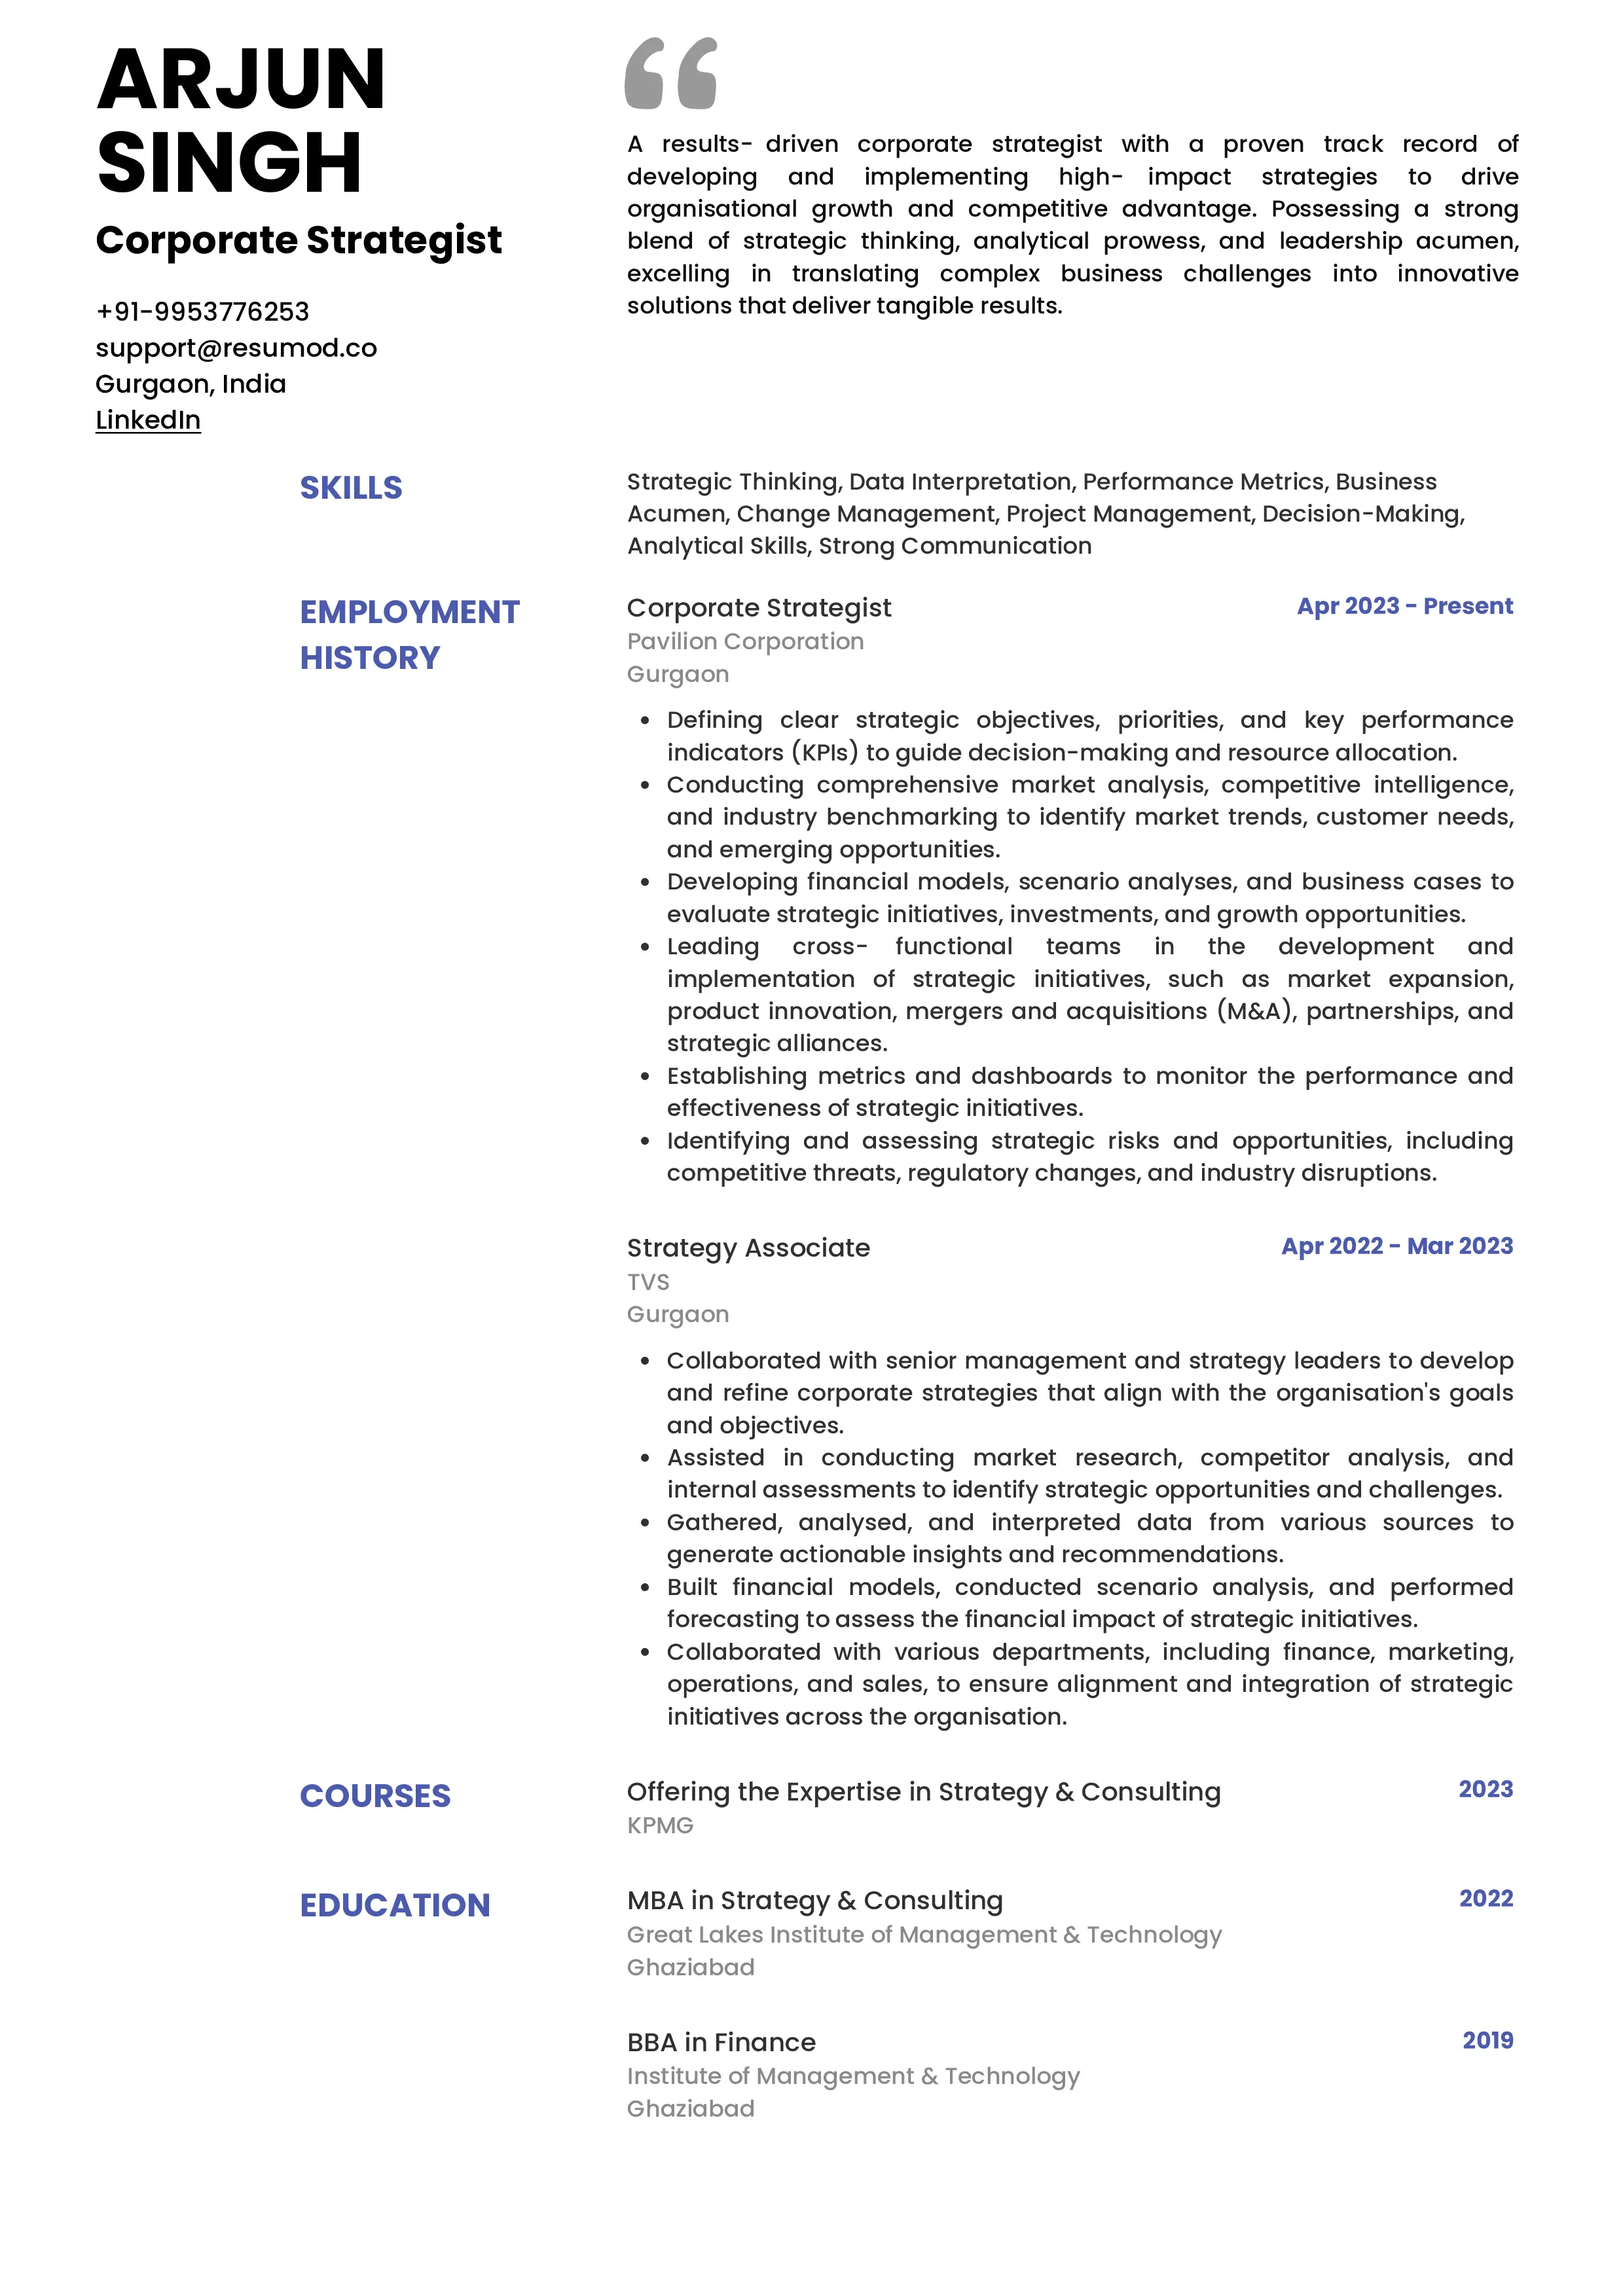 Sample Resume of Corporate Strategist | Free Resume Templates & Samples on Resumod.co